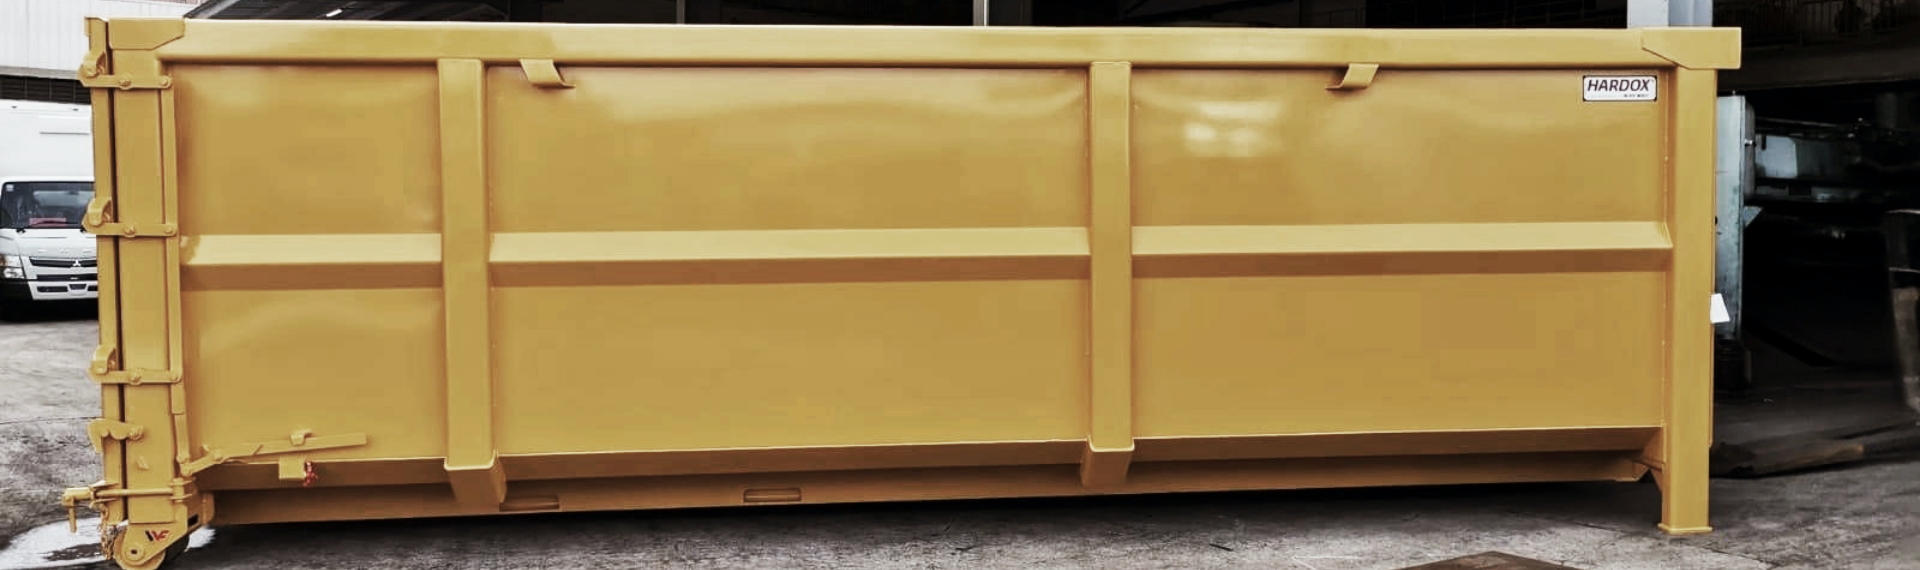 A sleek yellow steel waste container built in Hardox® HiAce steel.